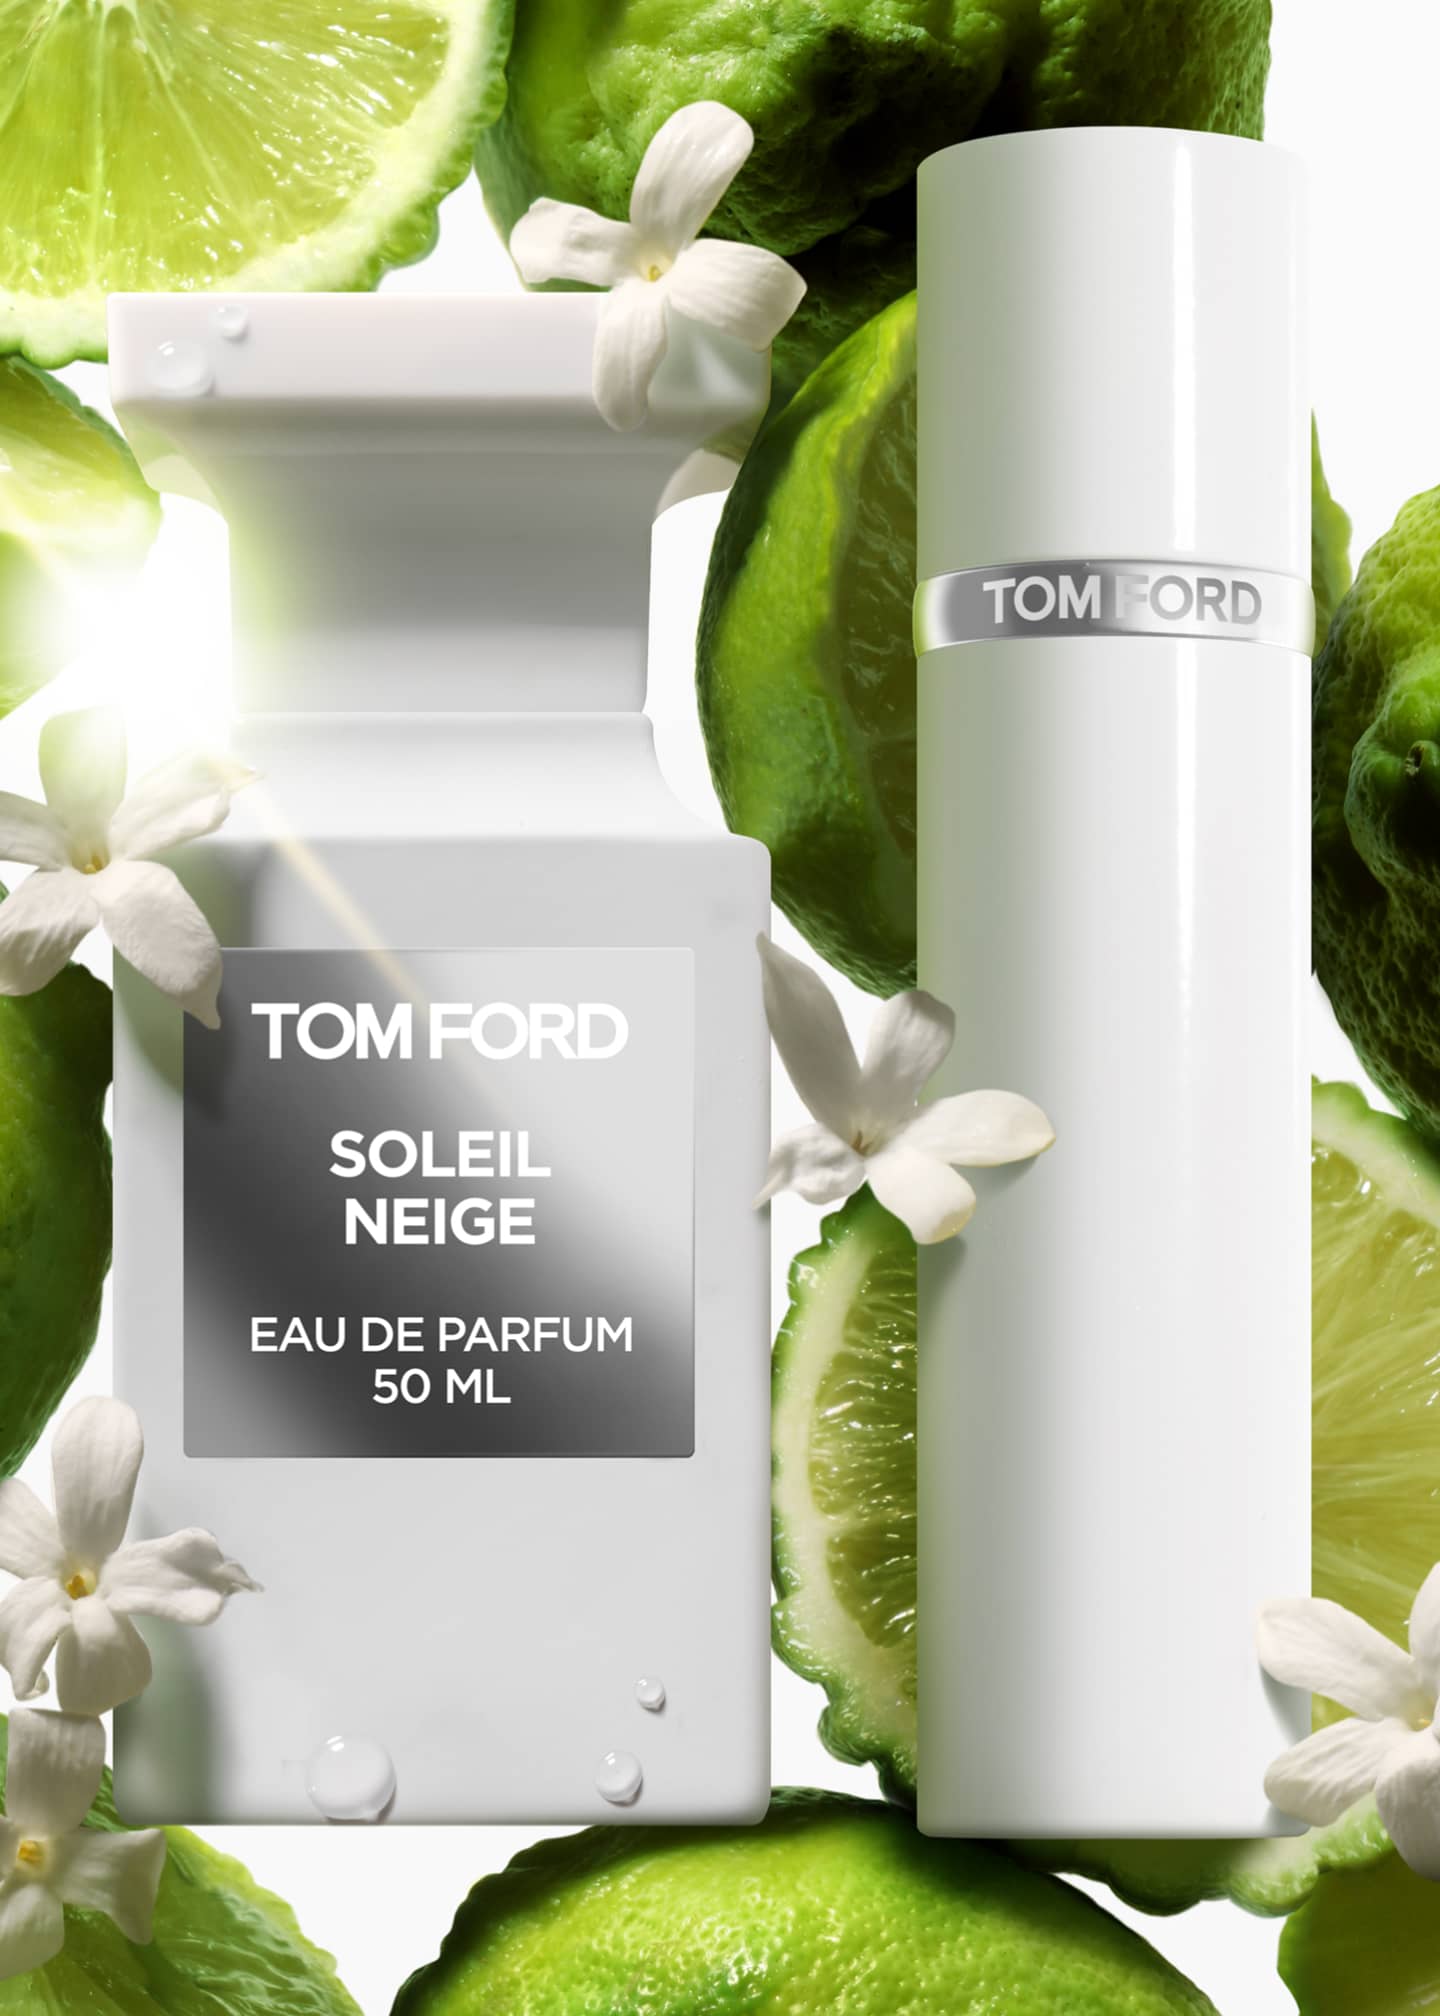 TOM FORD Soleil Neige Eau de Parfum Fragrance, 1.7 oz Image 3 of 3